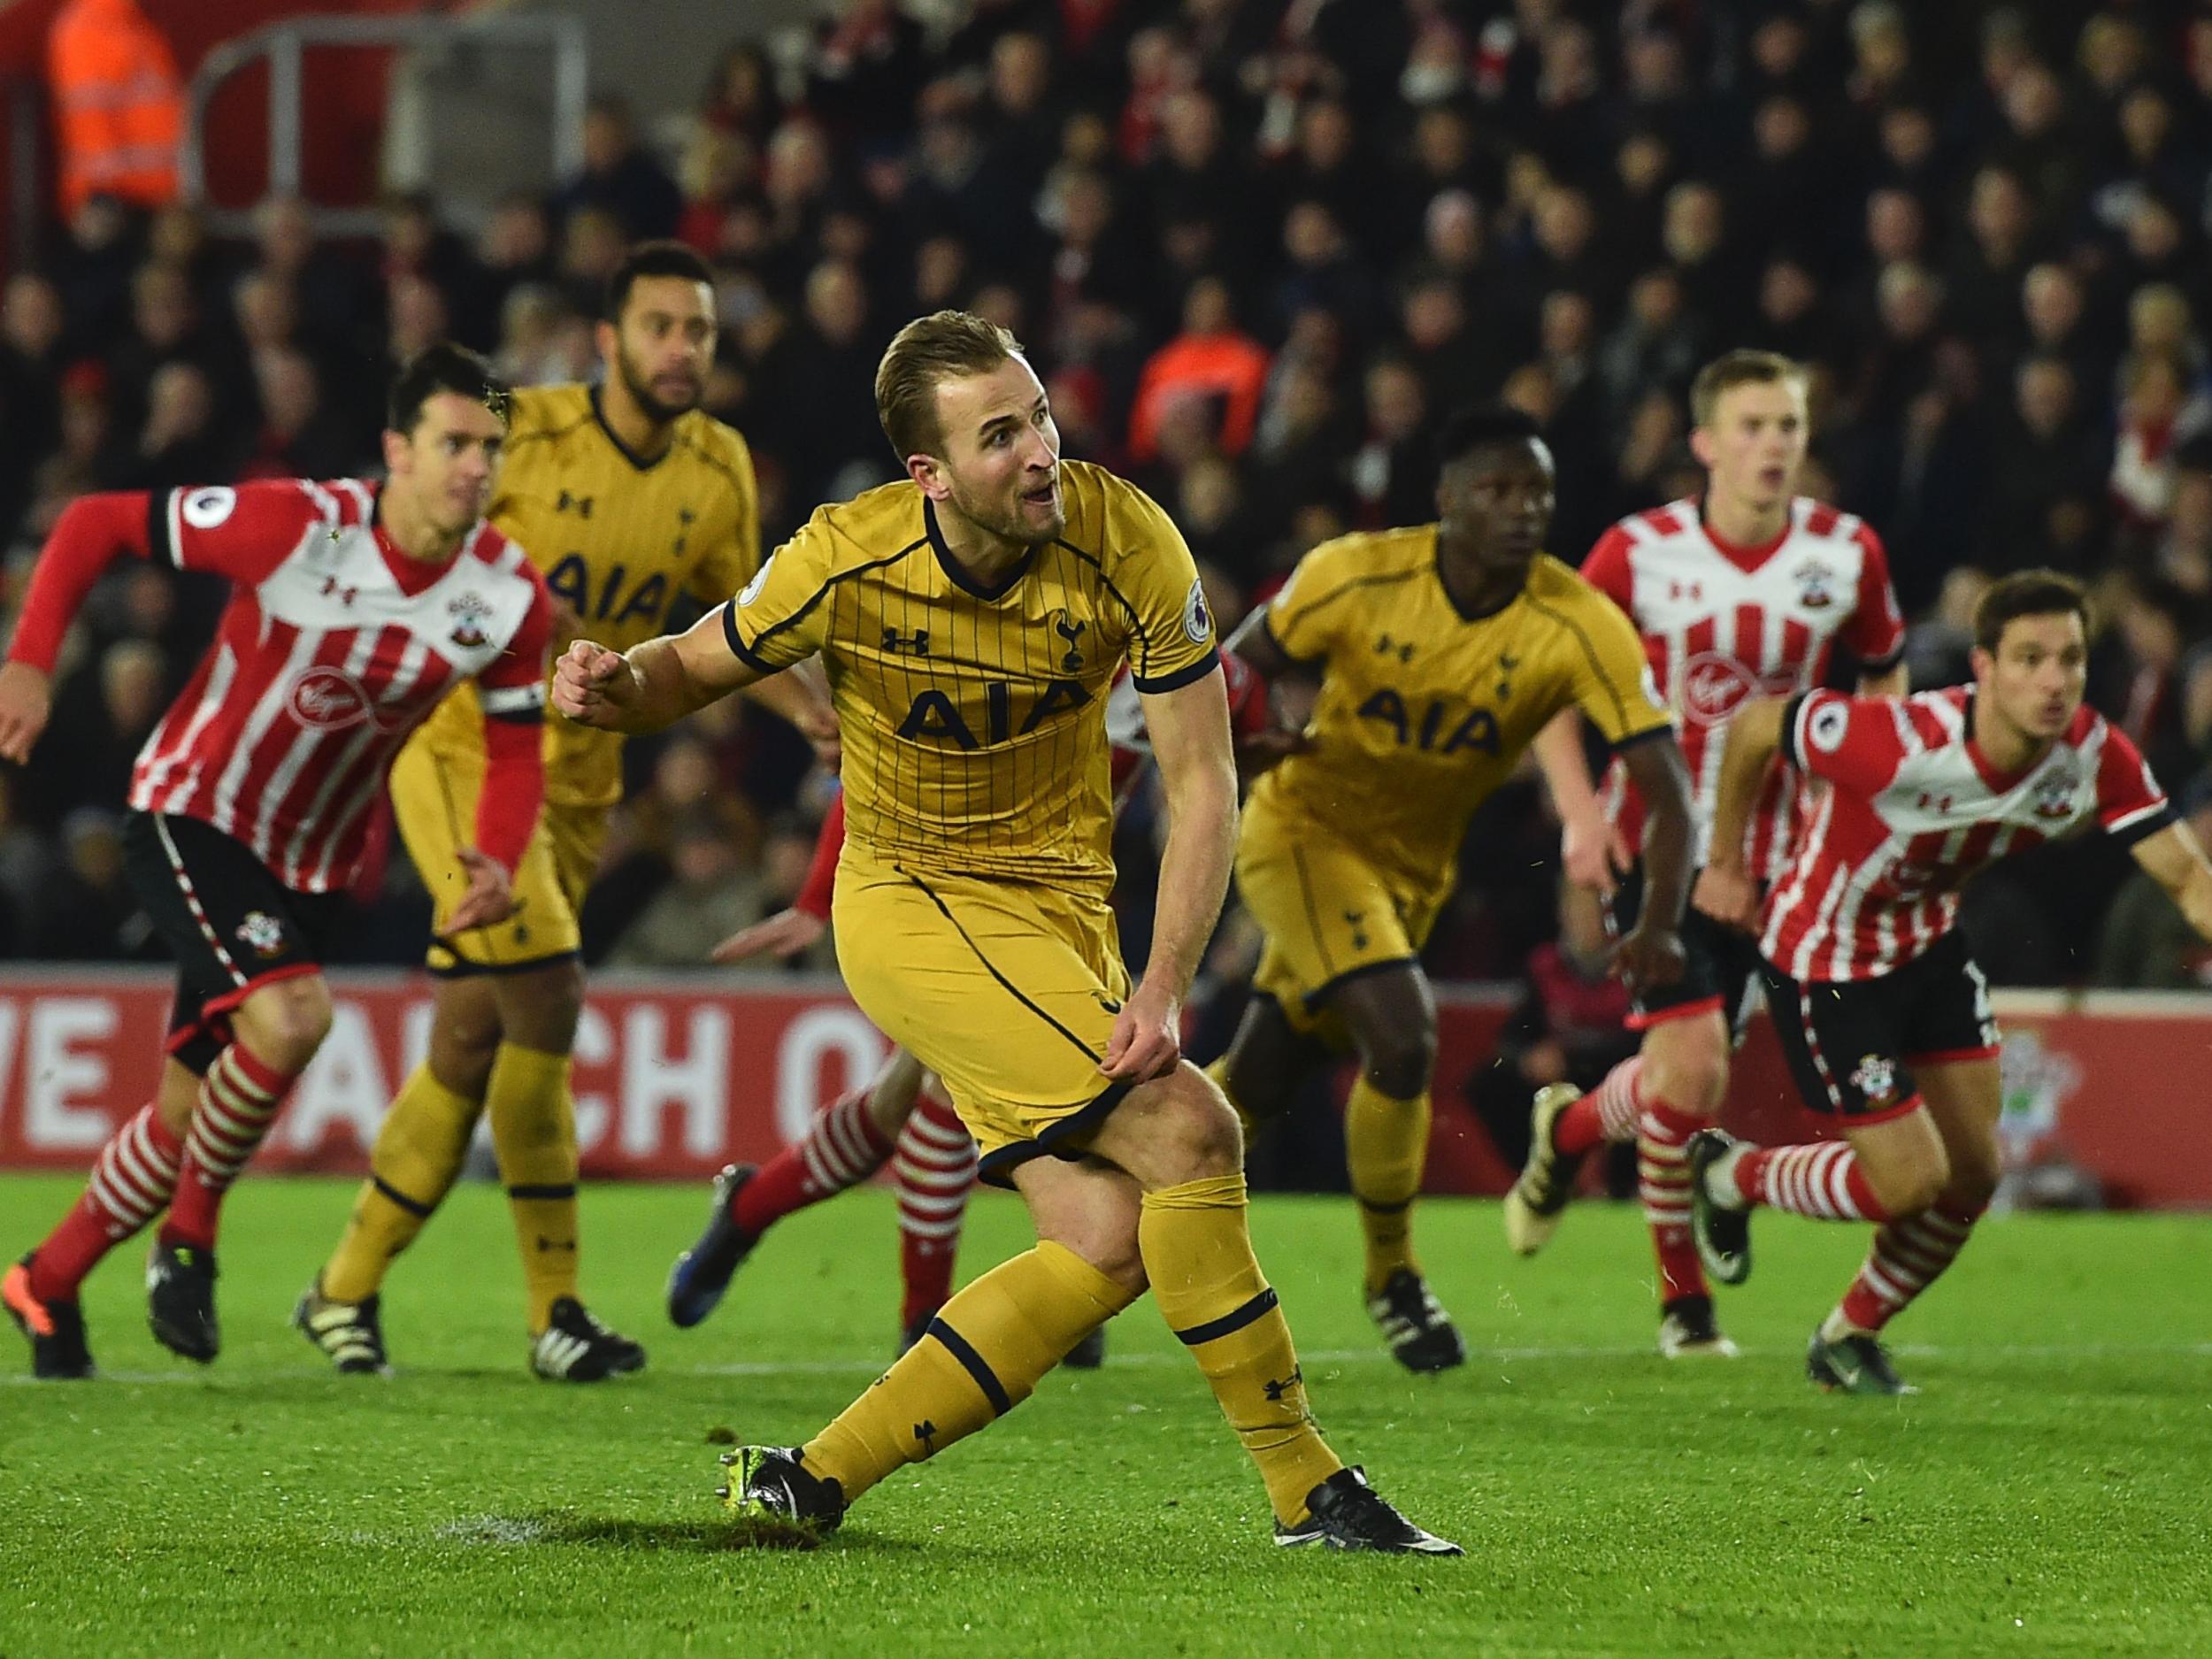 Kane's penalty soared far over the crossbar